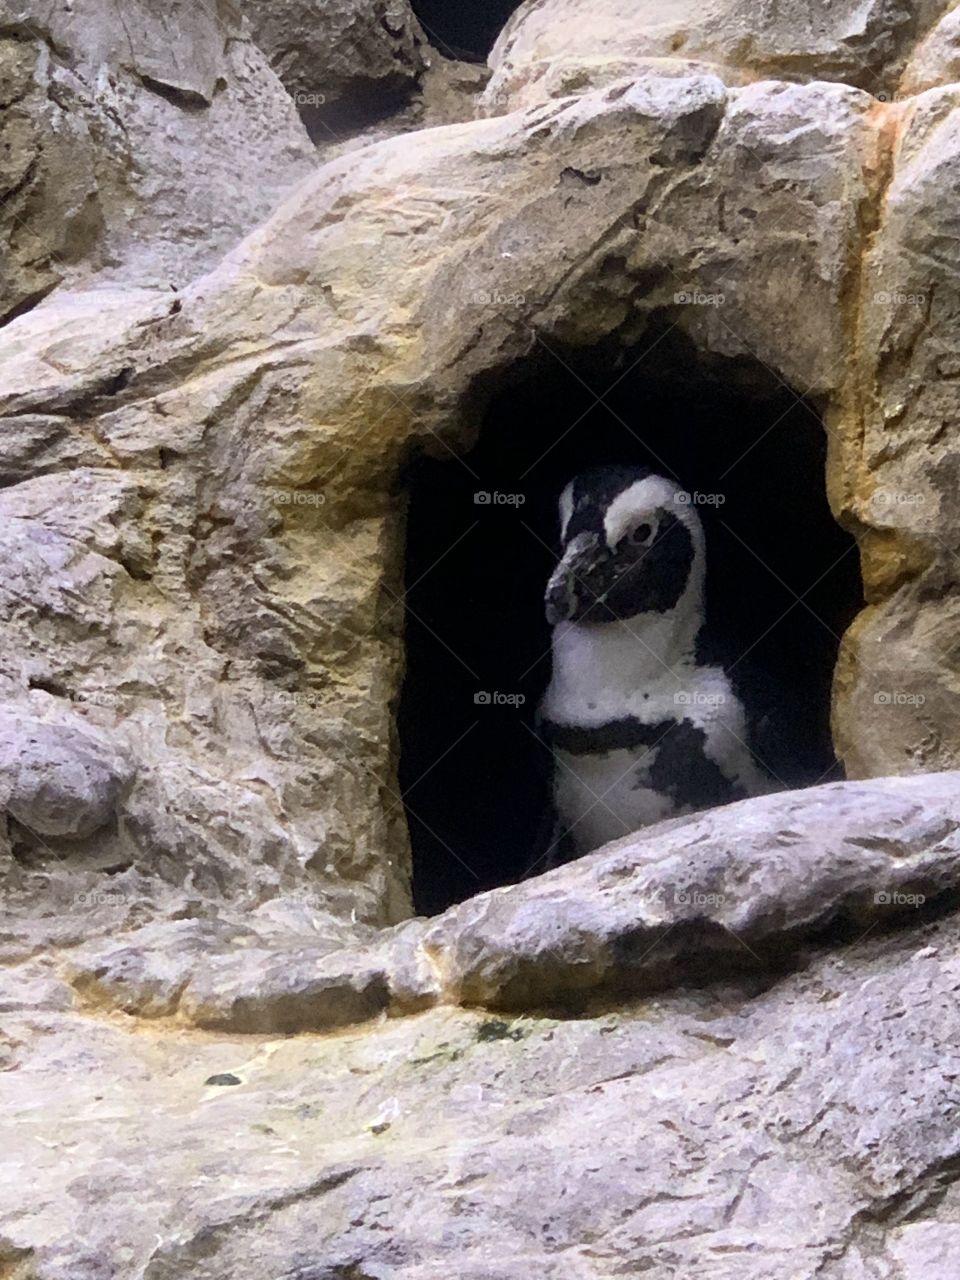 Penguin in the zoo. 